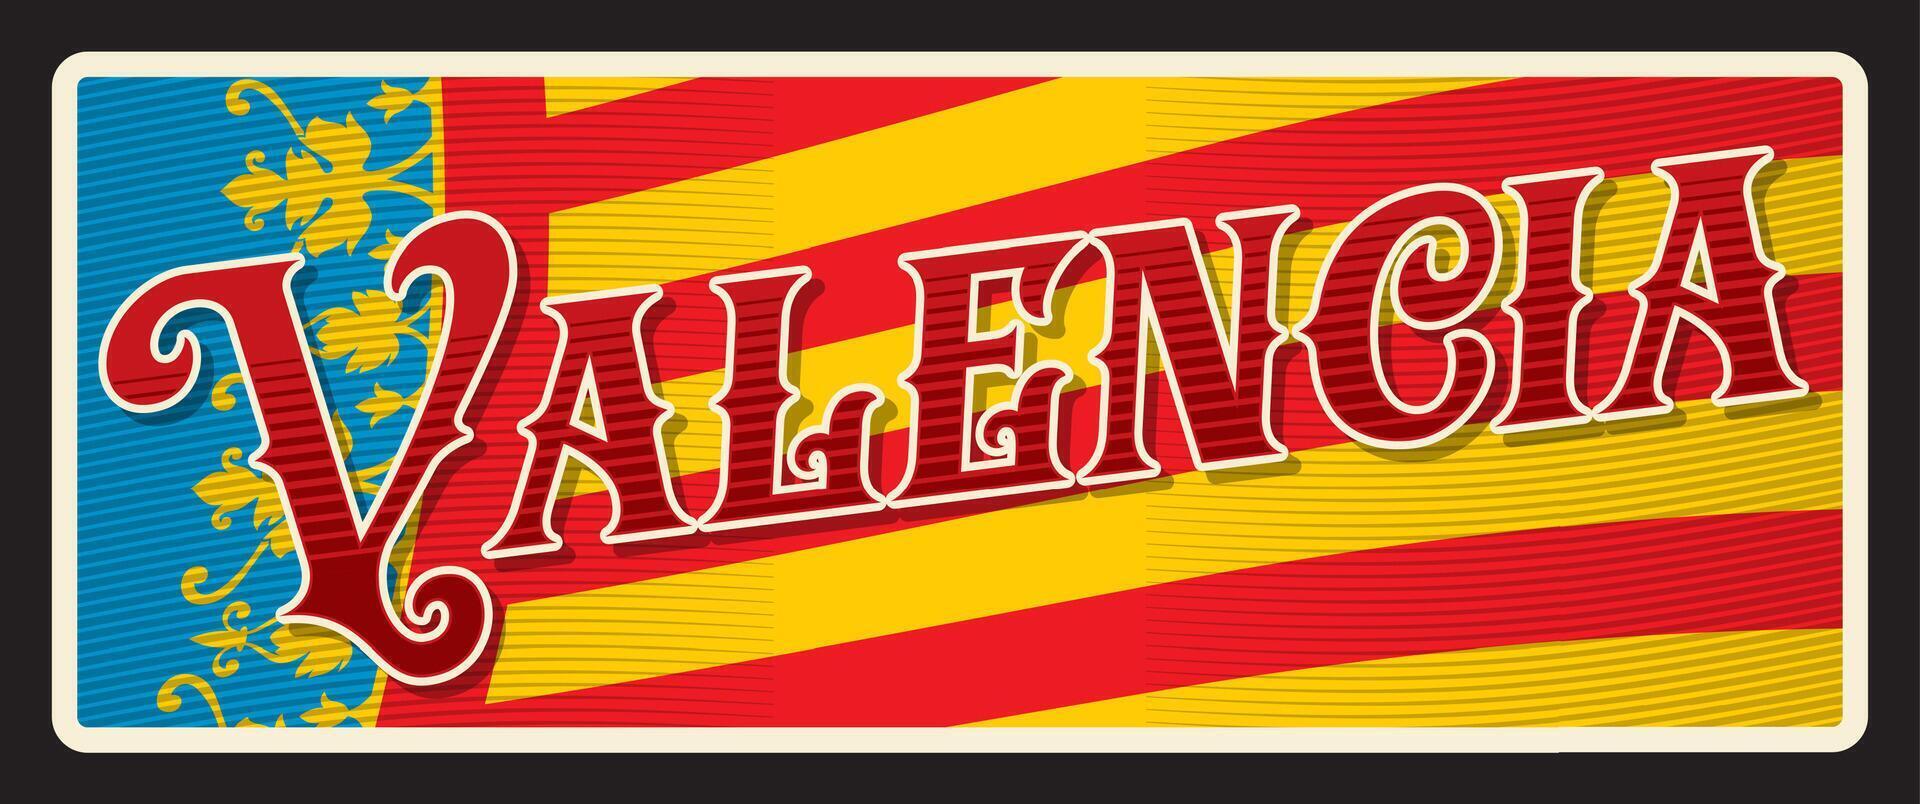 Valencia Spanish territory, vintage travel plate vector